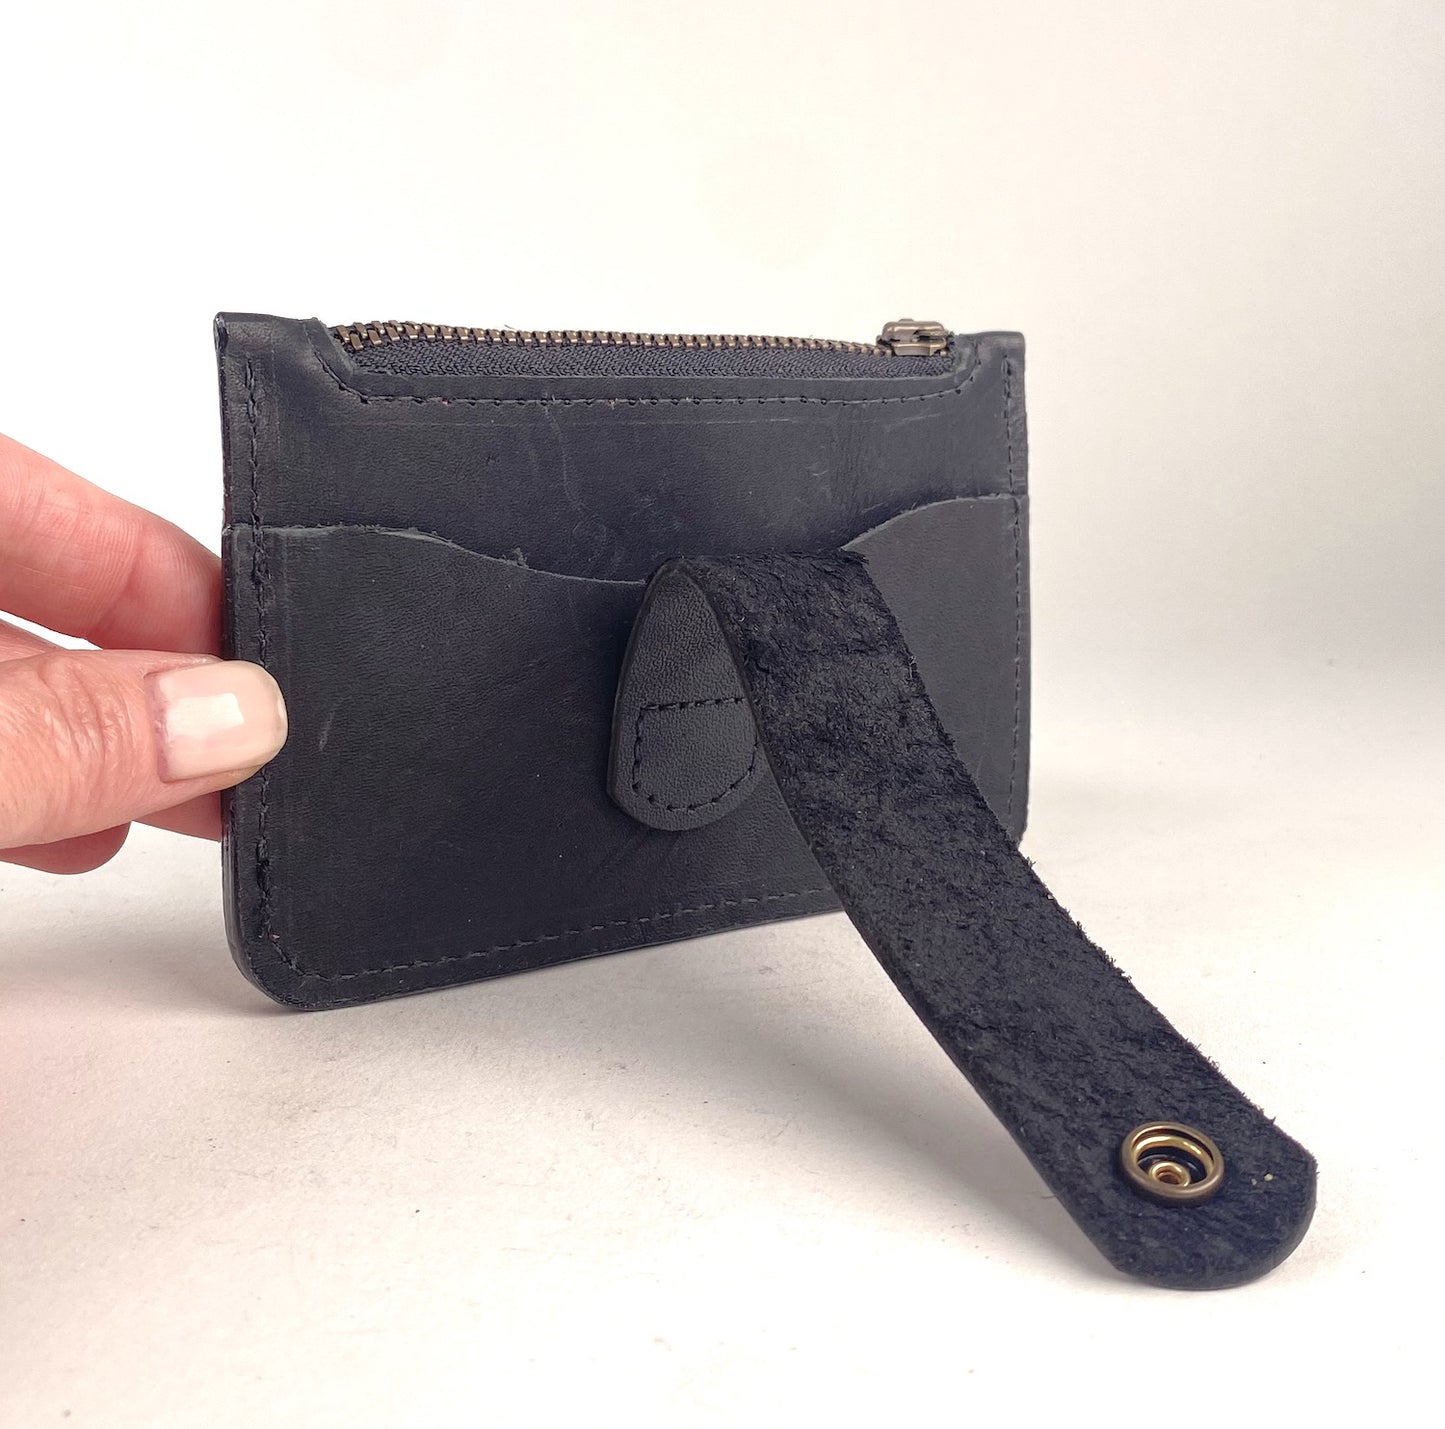 CardGuard Minimalist Leather Wallet in Black